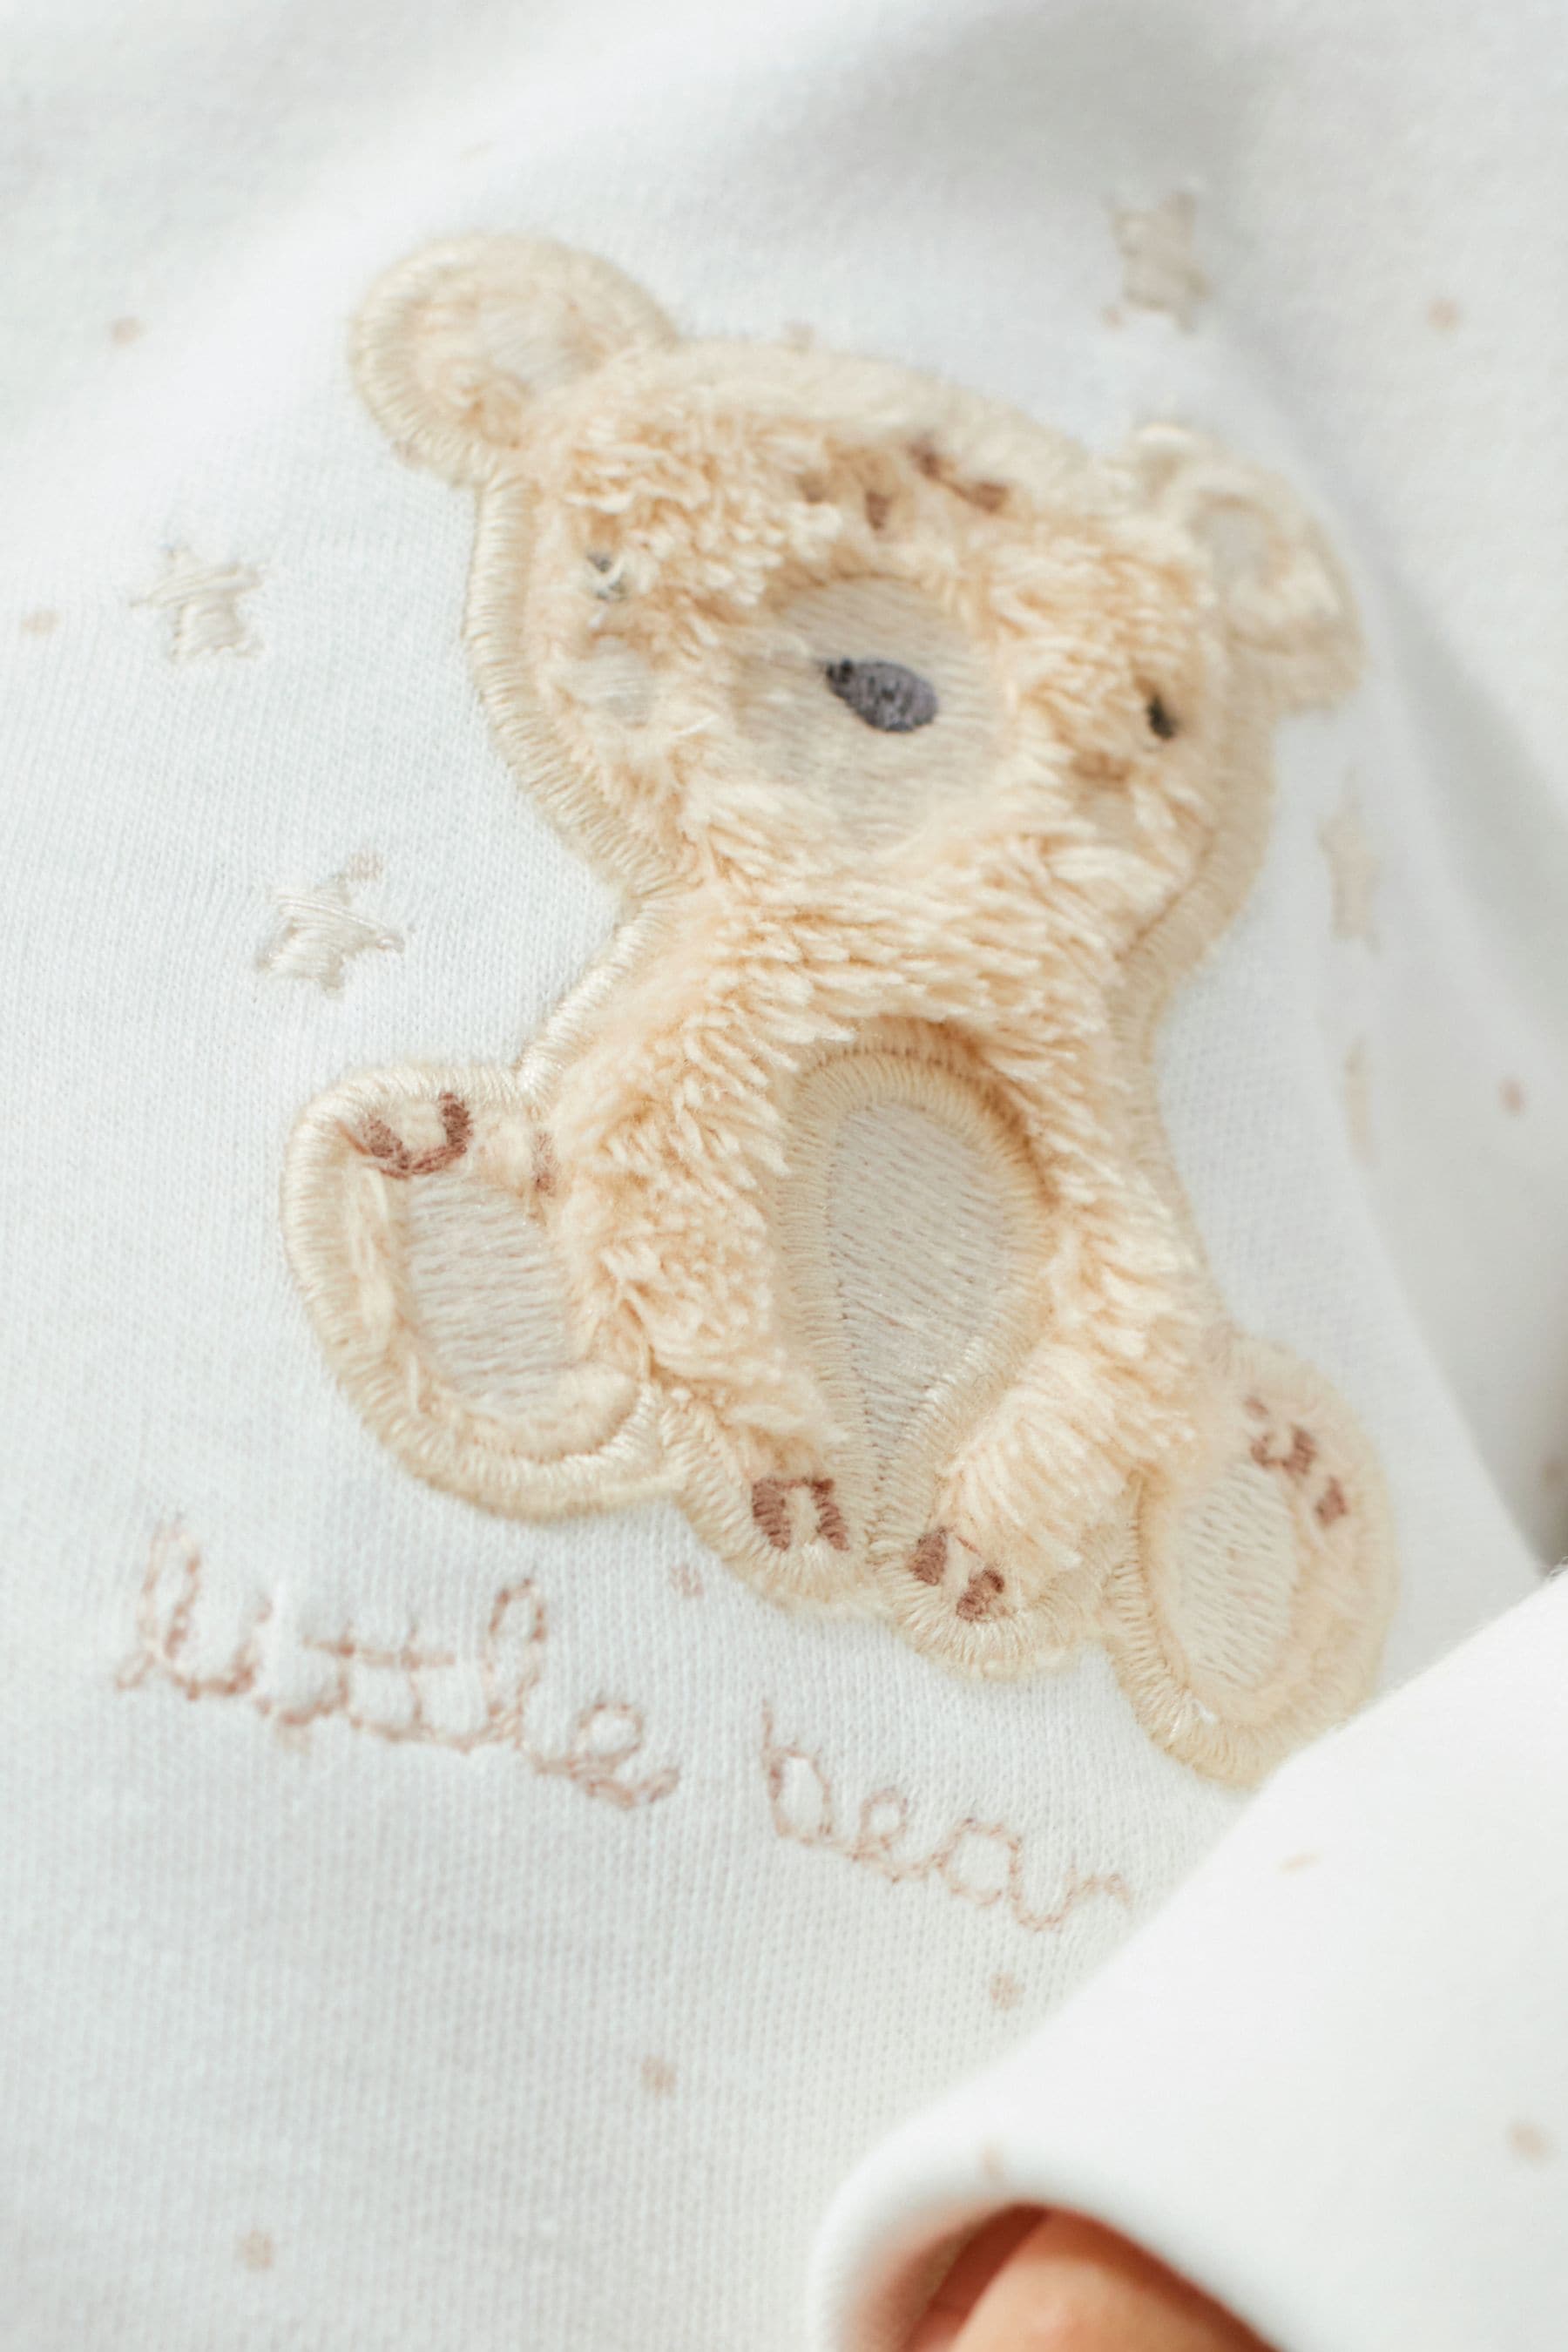 Tan Bear Delicate Appliquééé Baby Sleepsuits 3 Pack (0-2yrs)